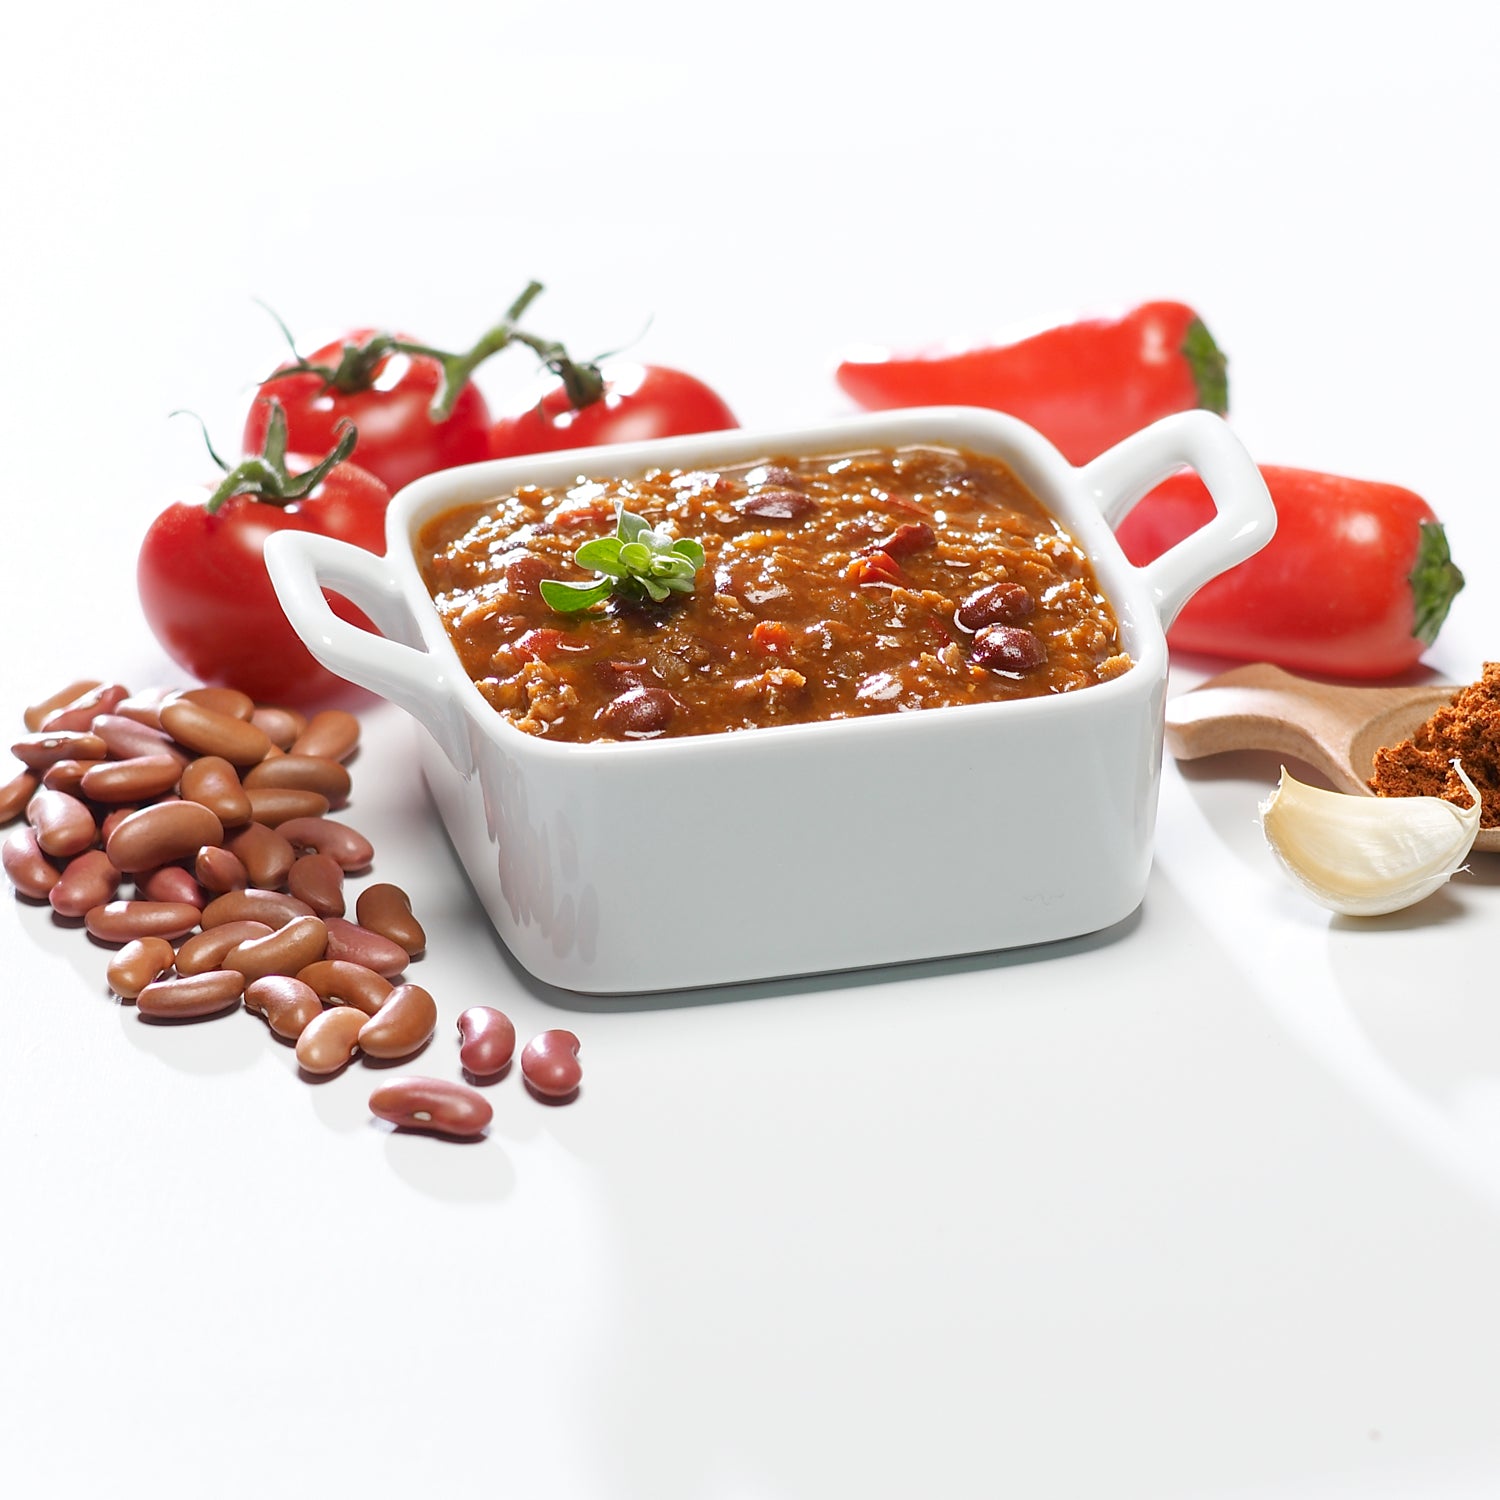 Proti meal – vegetable chili